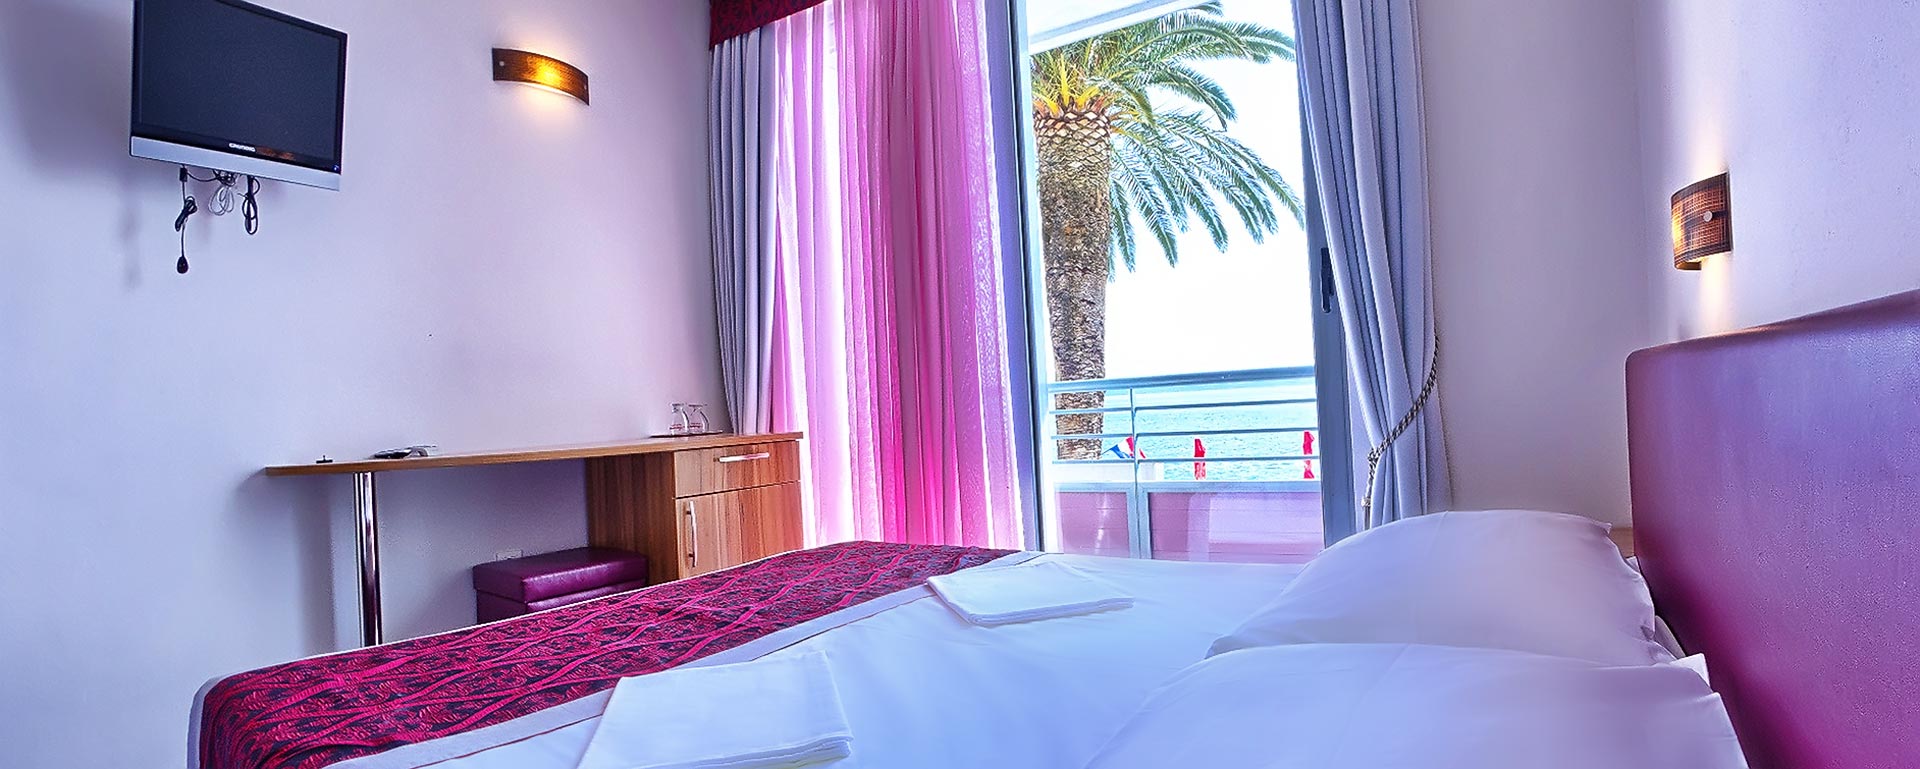 Double Bedroom Hotel Sirena